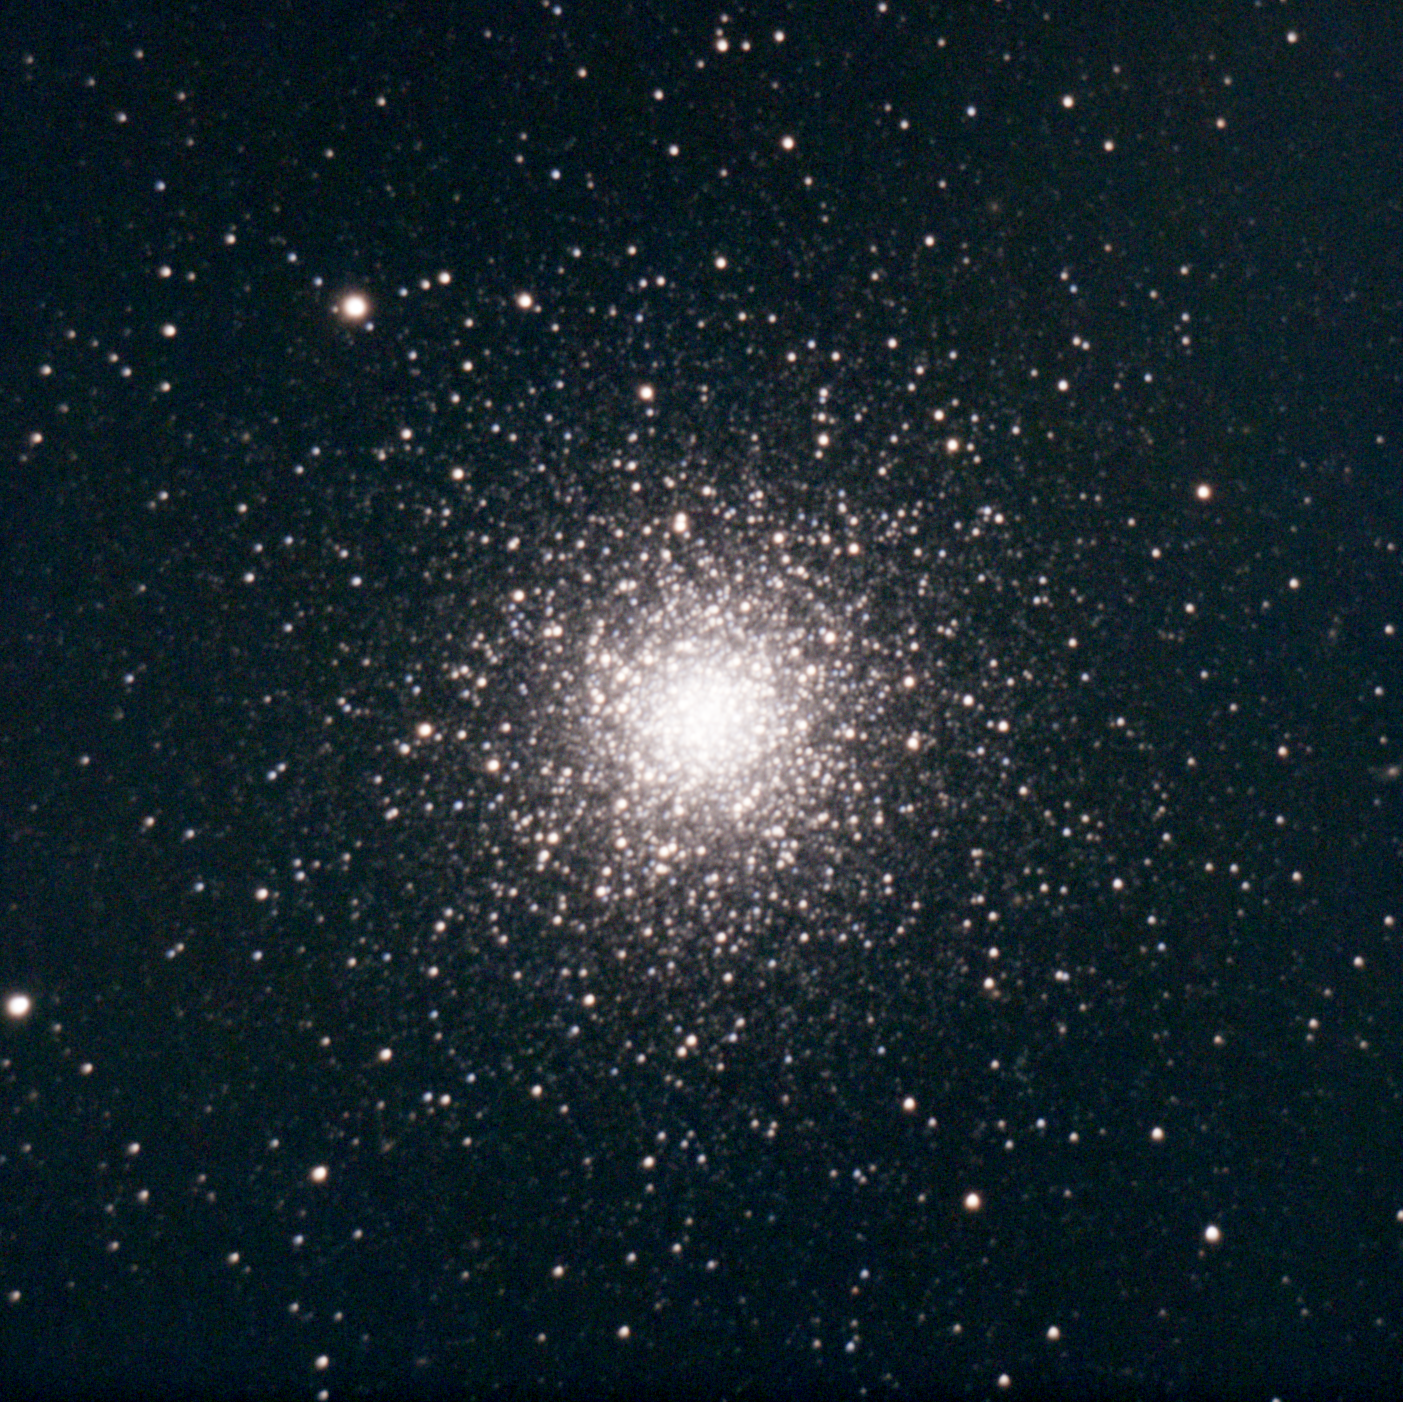 M3 是在北天猎犬座中的一个球状星团，距离地球大约3.39万光年。RGB Bin2 10s * 255，共计0.7小时曝光